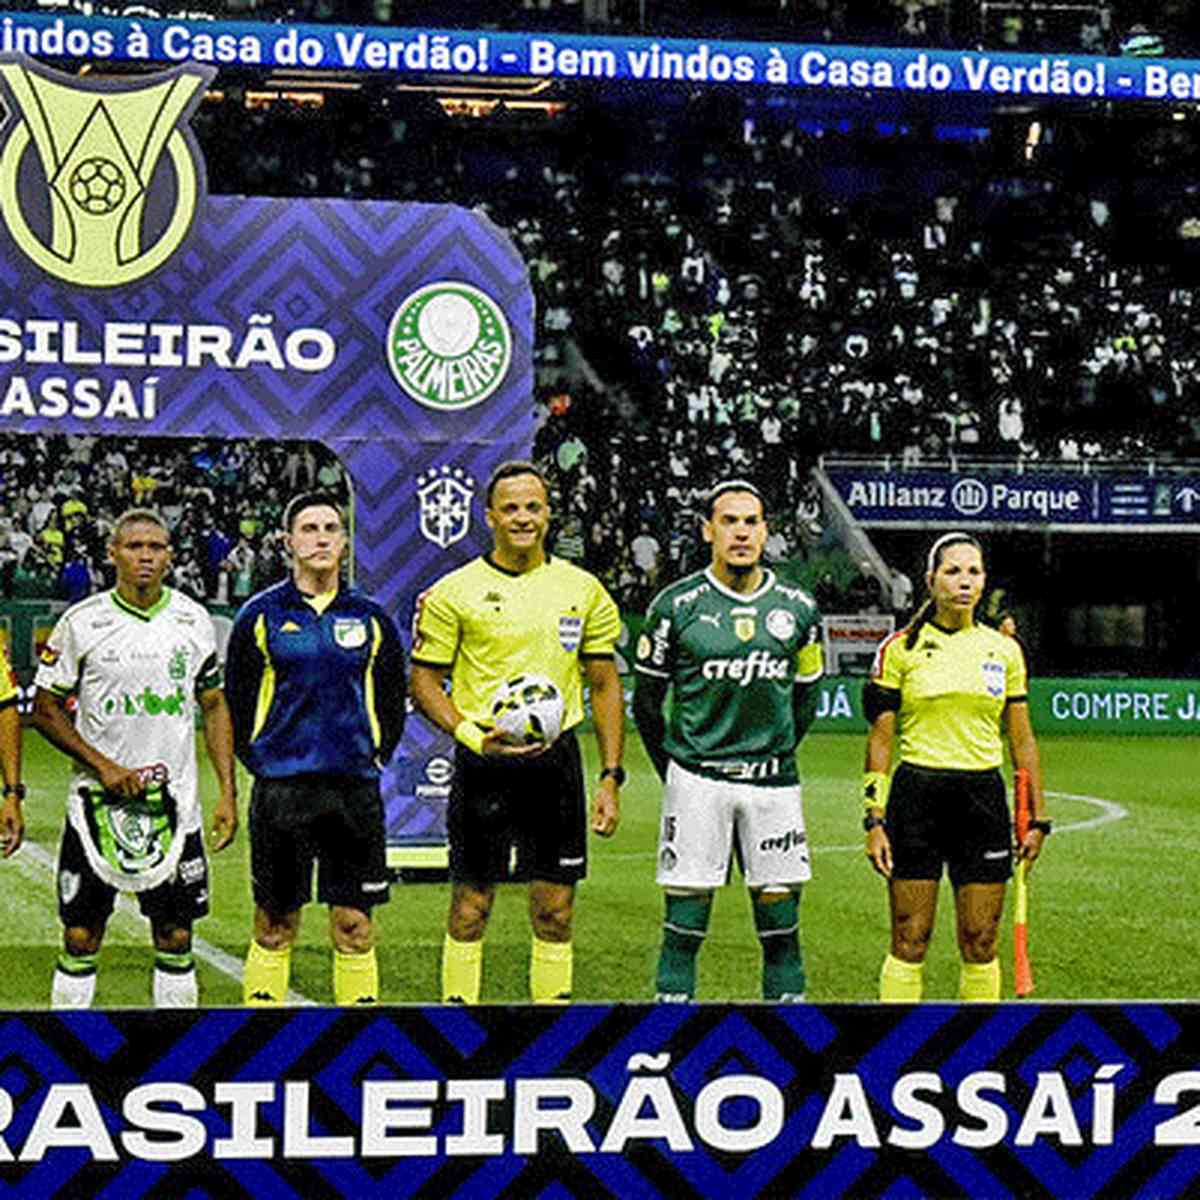 Palmeiras 2 x 1 Corinthians  Campeonato Brasileiro: melhores momentos